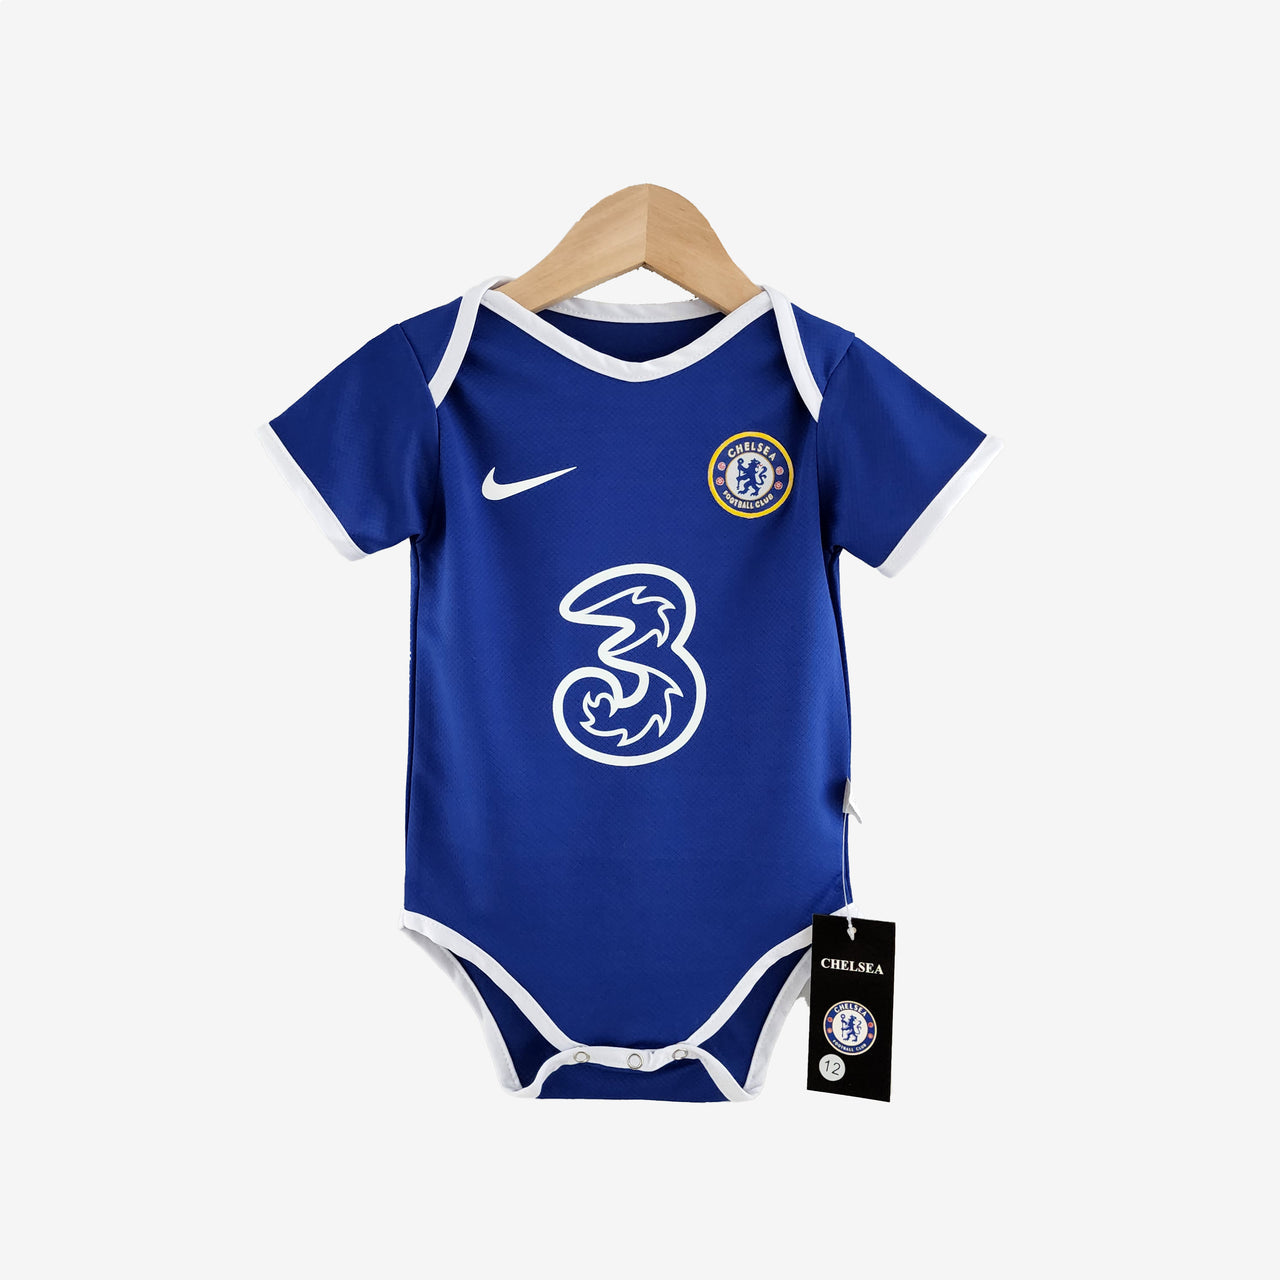 Chelsea FC Baby-Body 22/23